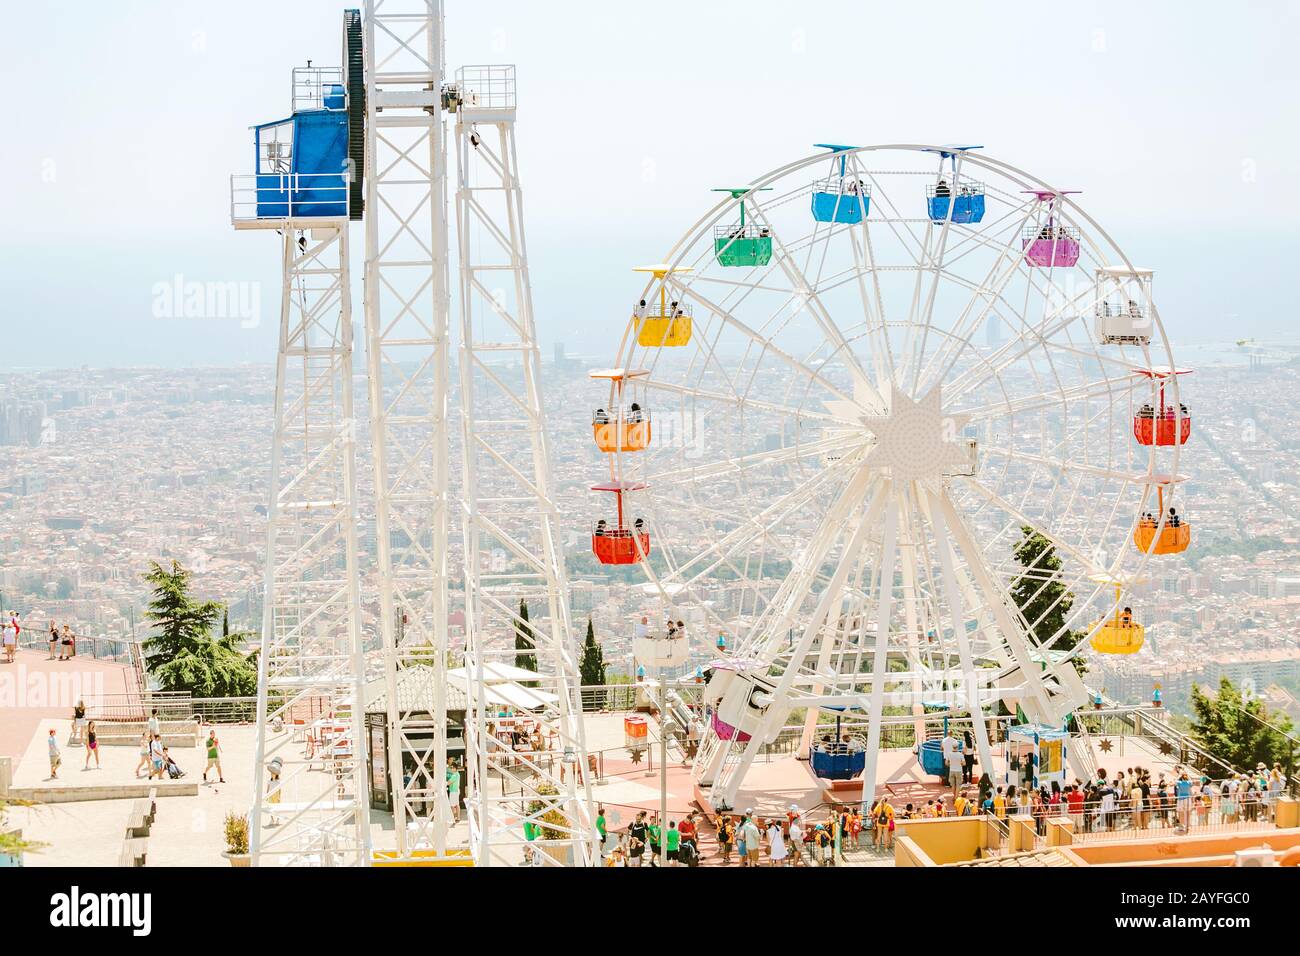 12 JULY 2018, BARCELONA, SPAIN: Ferris wheel in Tibidabo with panoramic view Stock Photo